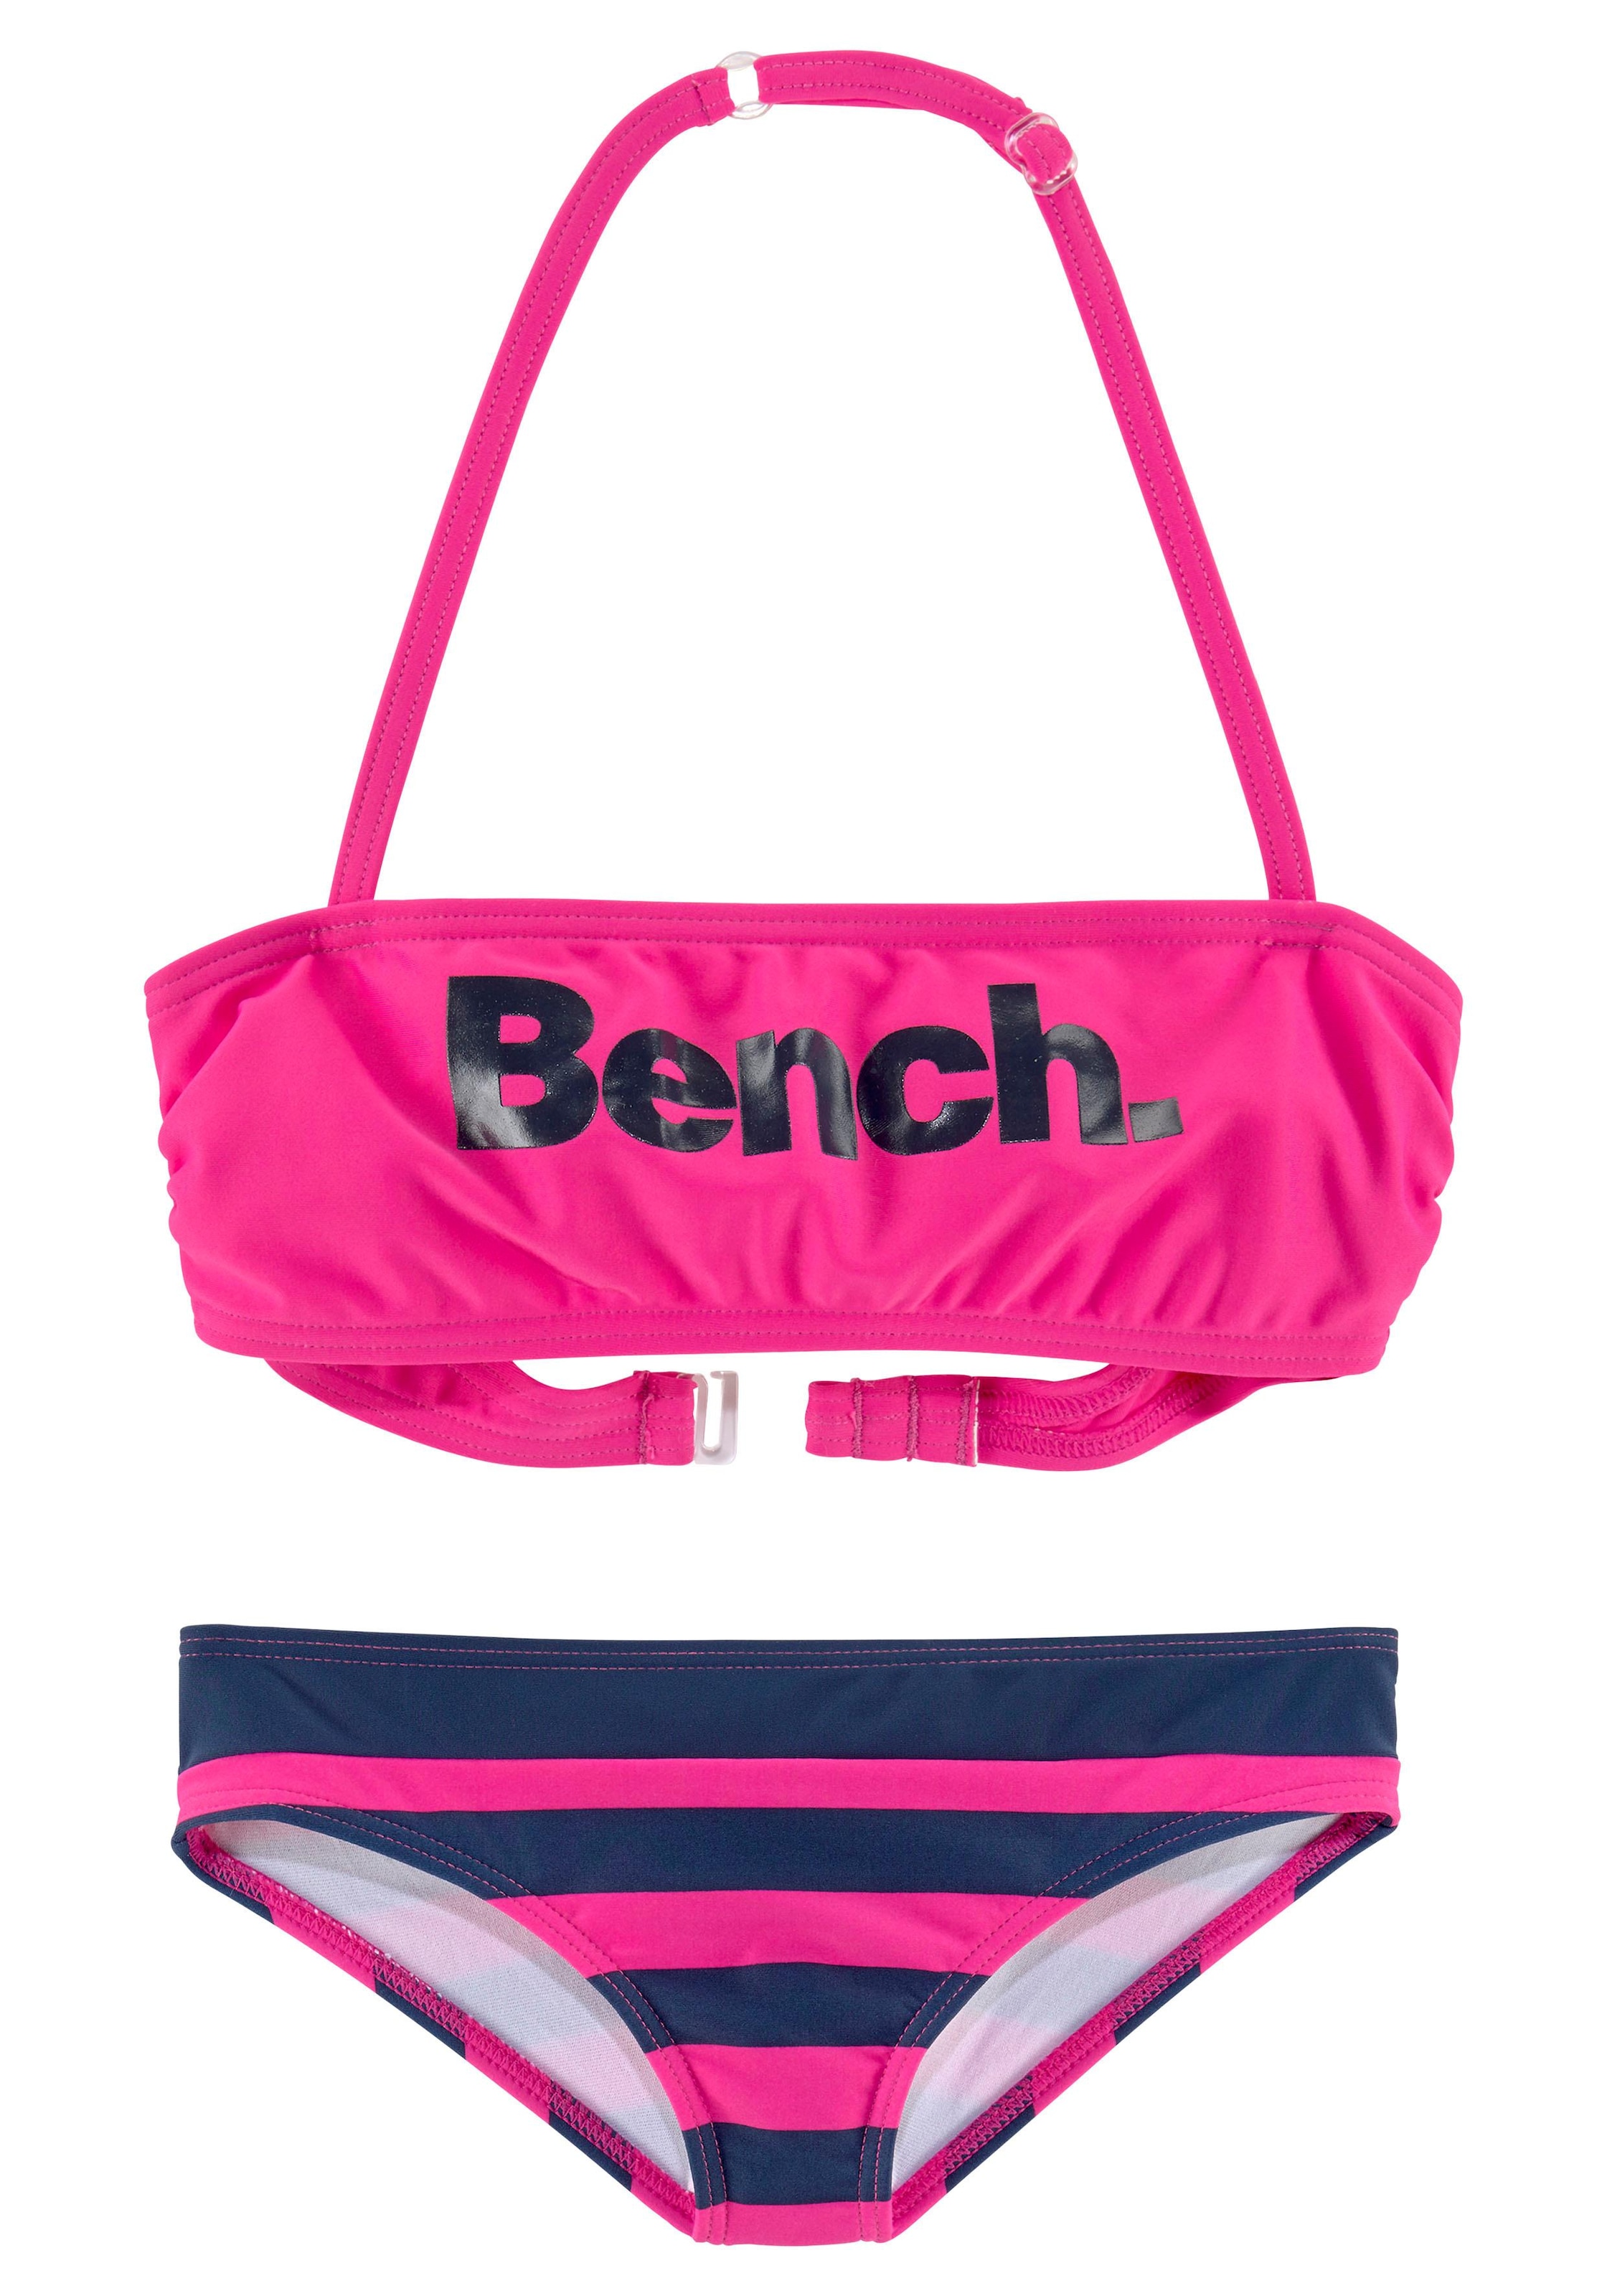 Bench. Bandeau-Bikini, mit großem Logoprint im kaufen Online-Shop